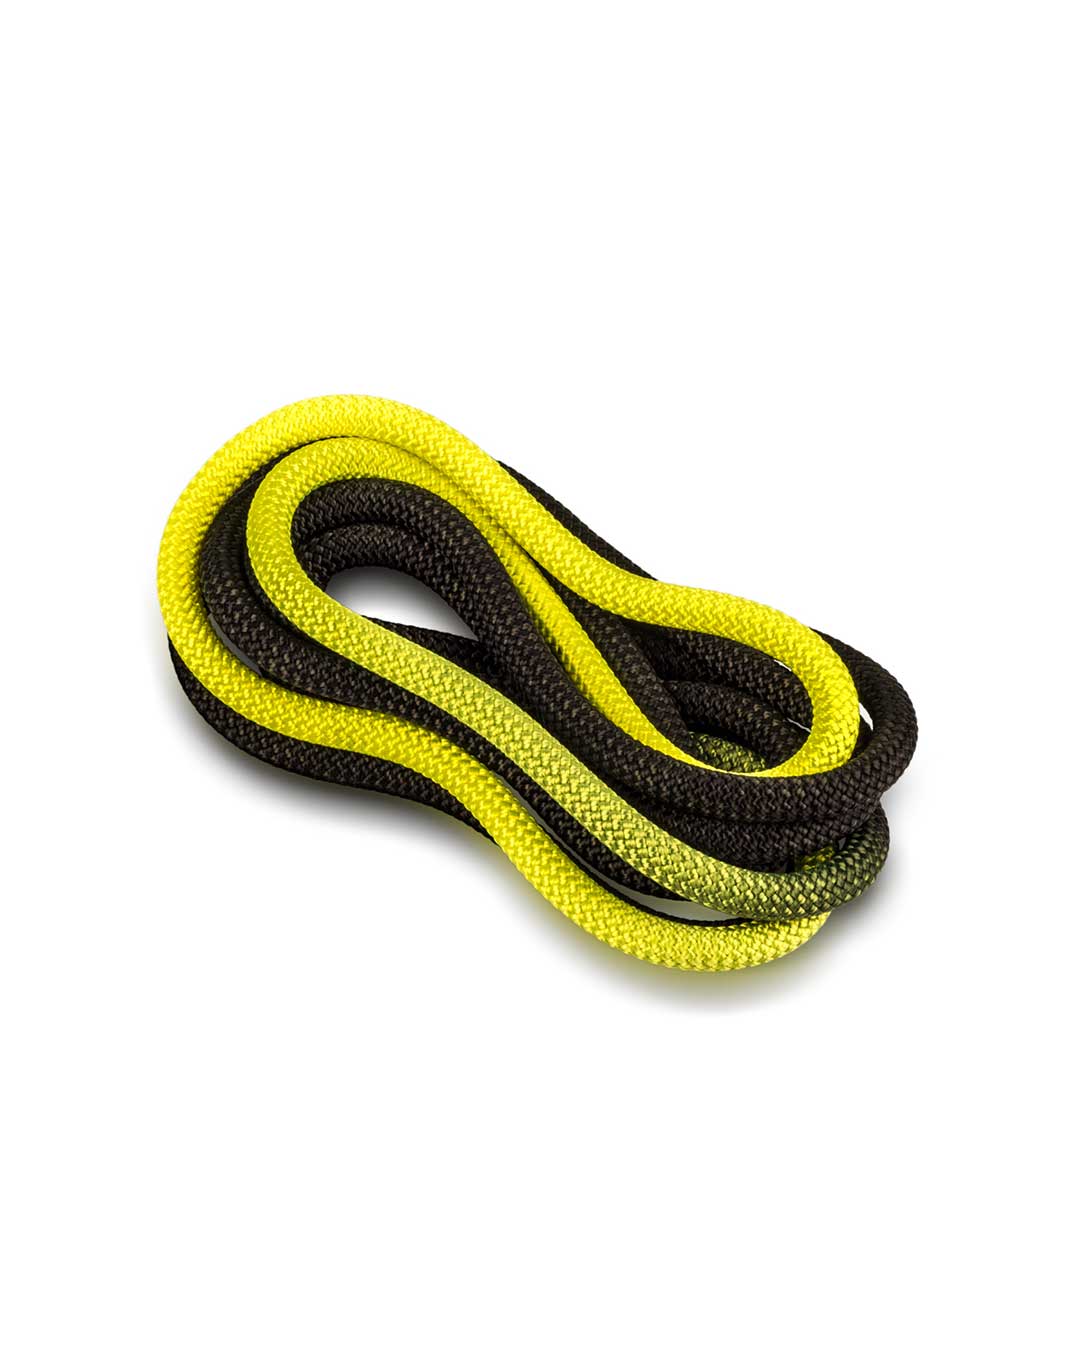 Cuerda de gimnasia rítmica VENTURELLI (Certificada FIG) amarillo neón - negro - 3 m 